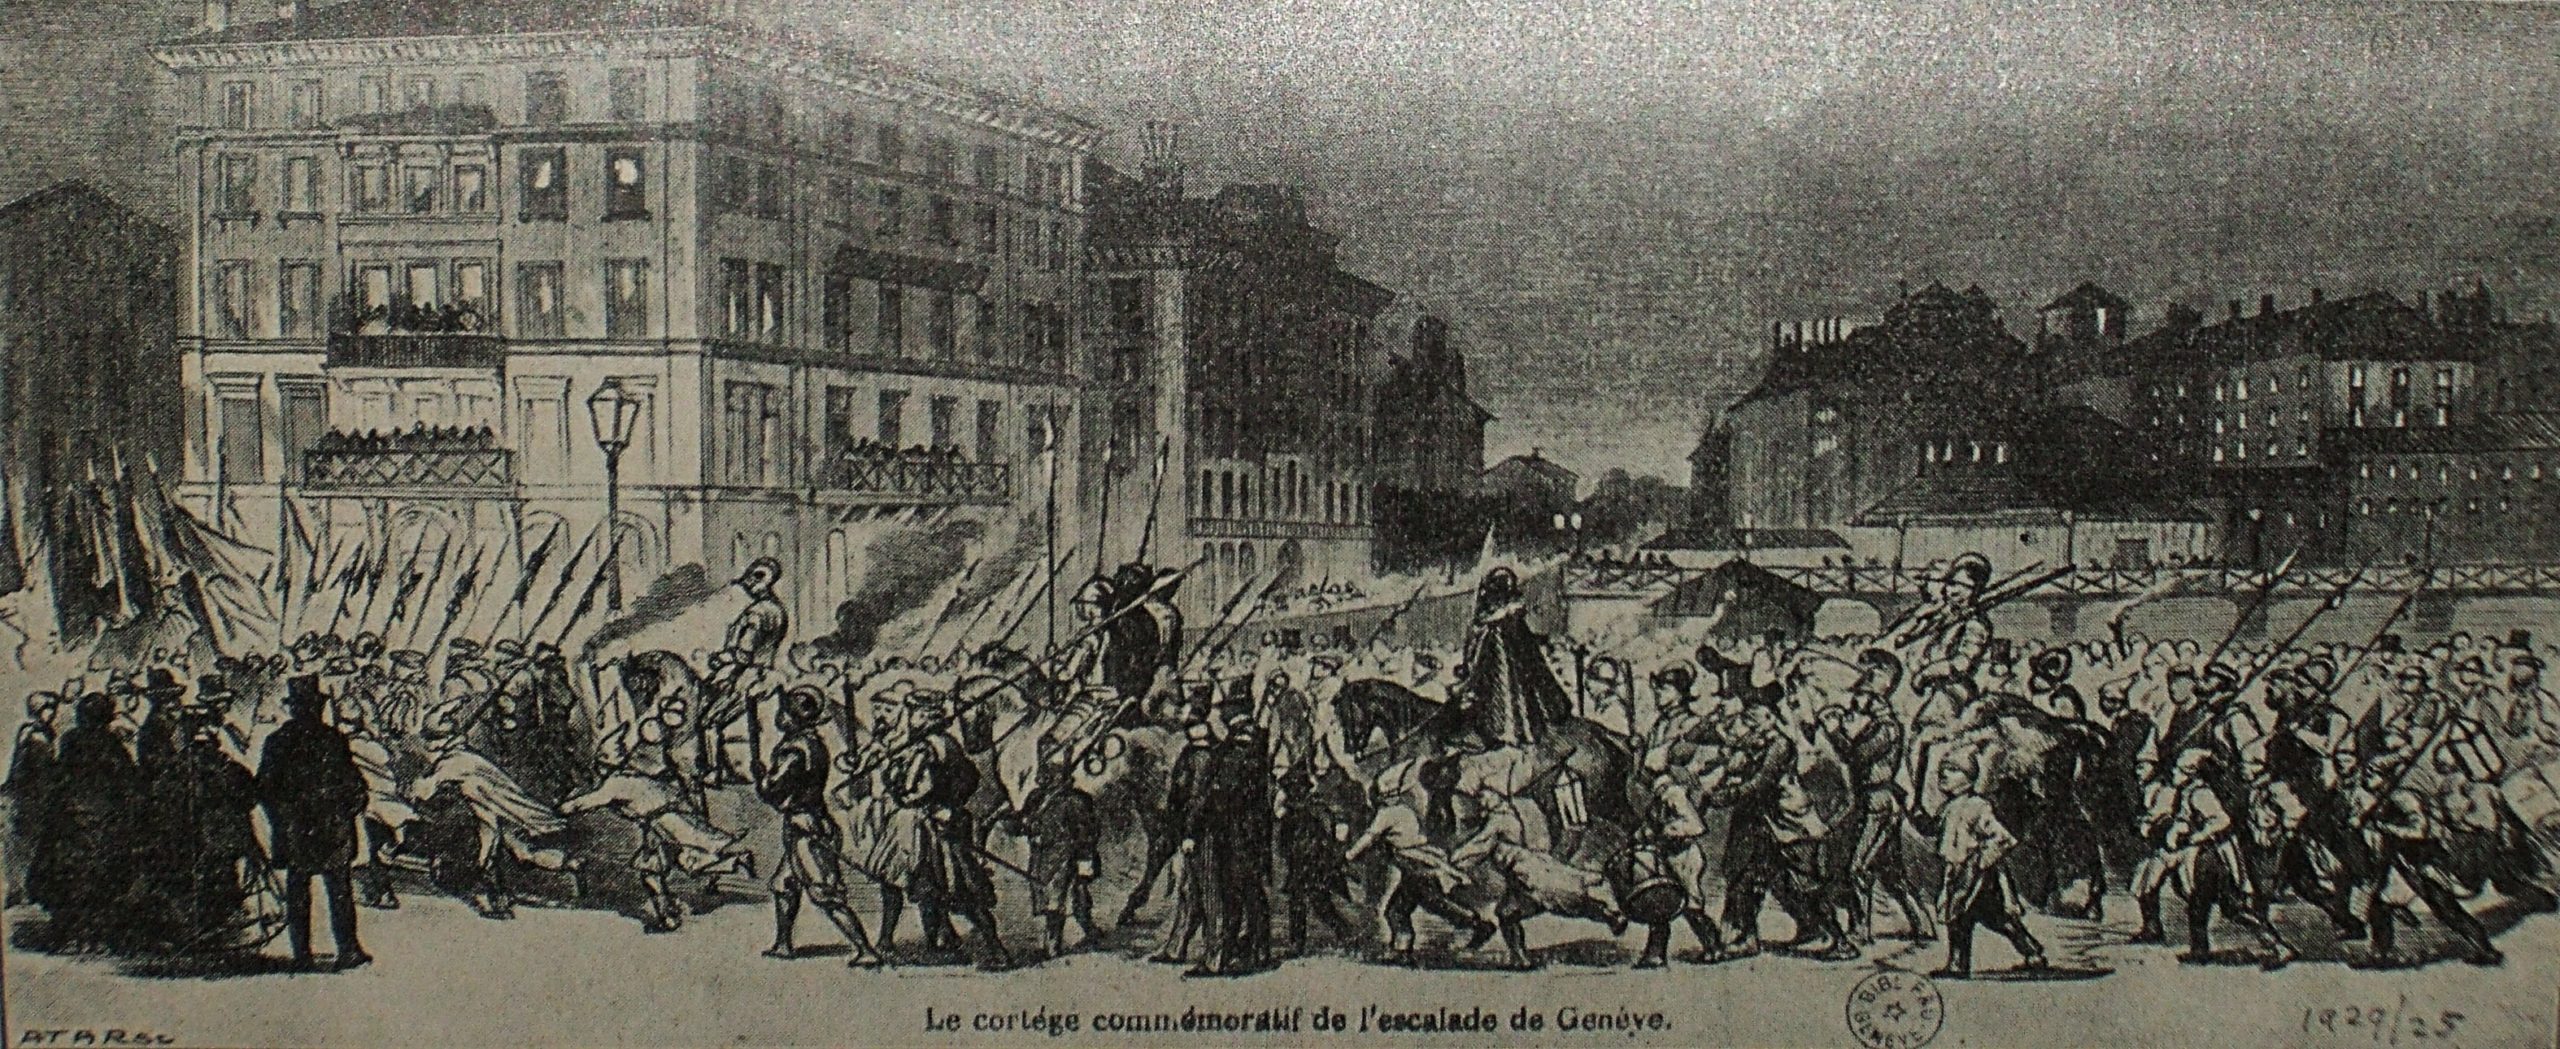 La tradition du cortège de l'Escalade naît en 1793